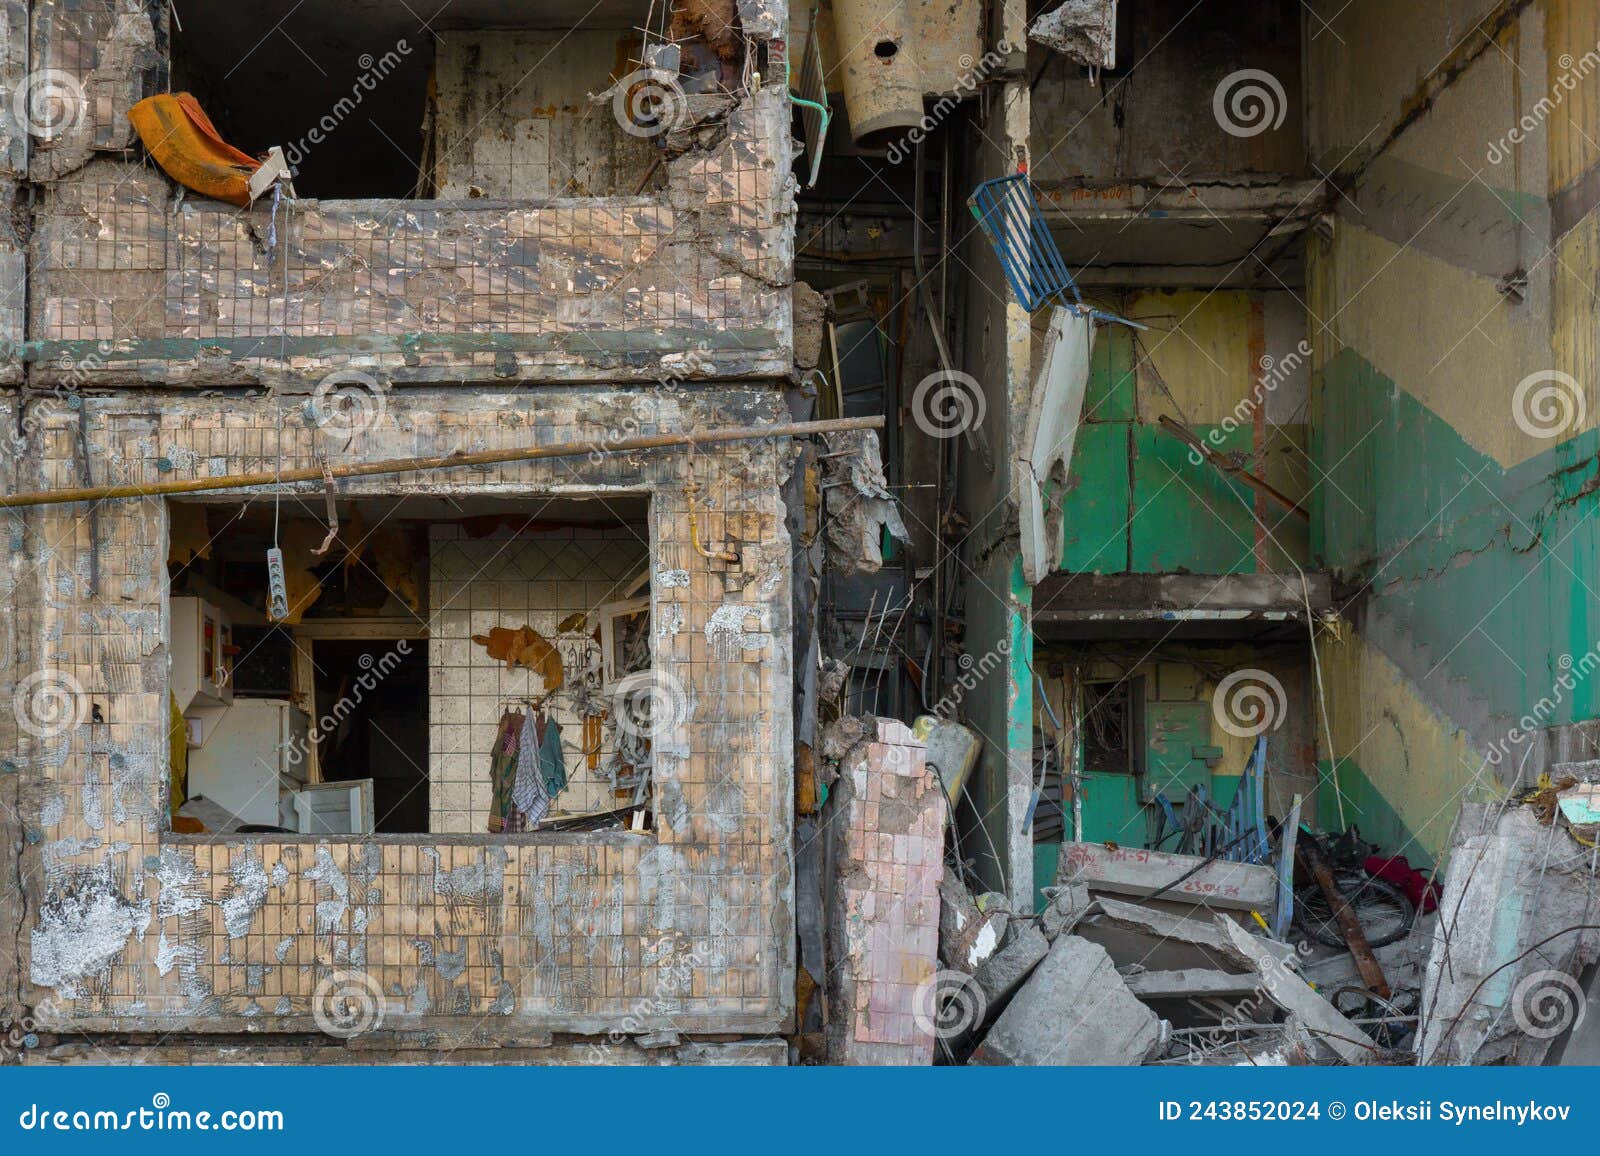 rocket bomb attack russia against ukraine war destruction building ruins city destroyed mariupol damaged kyiv ruined